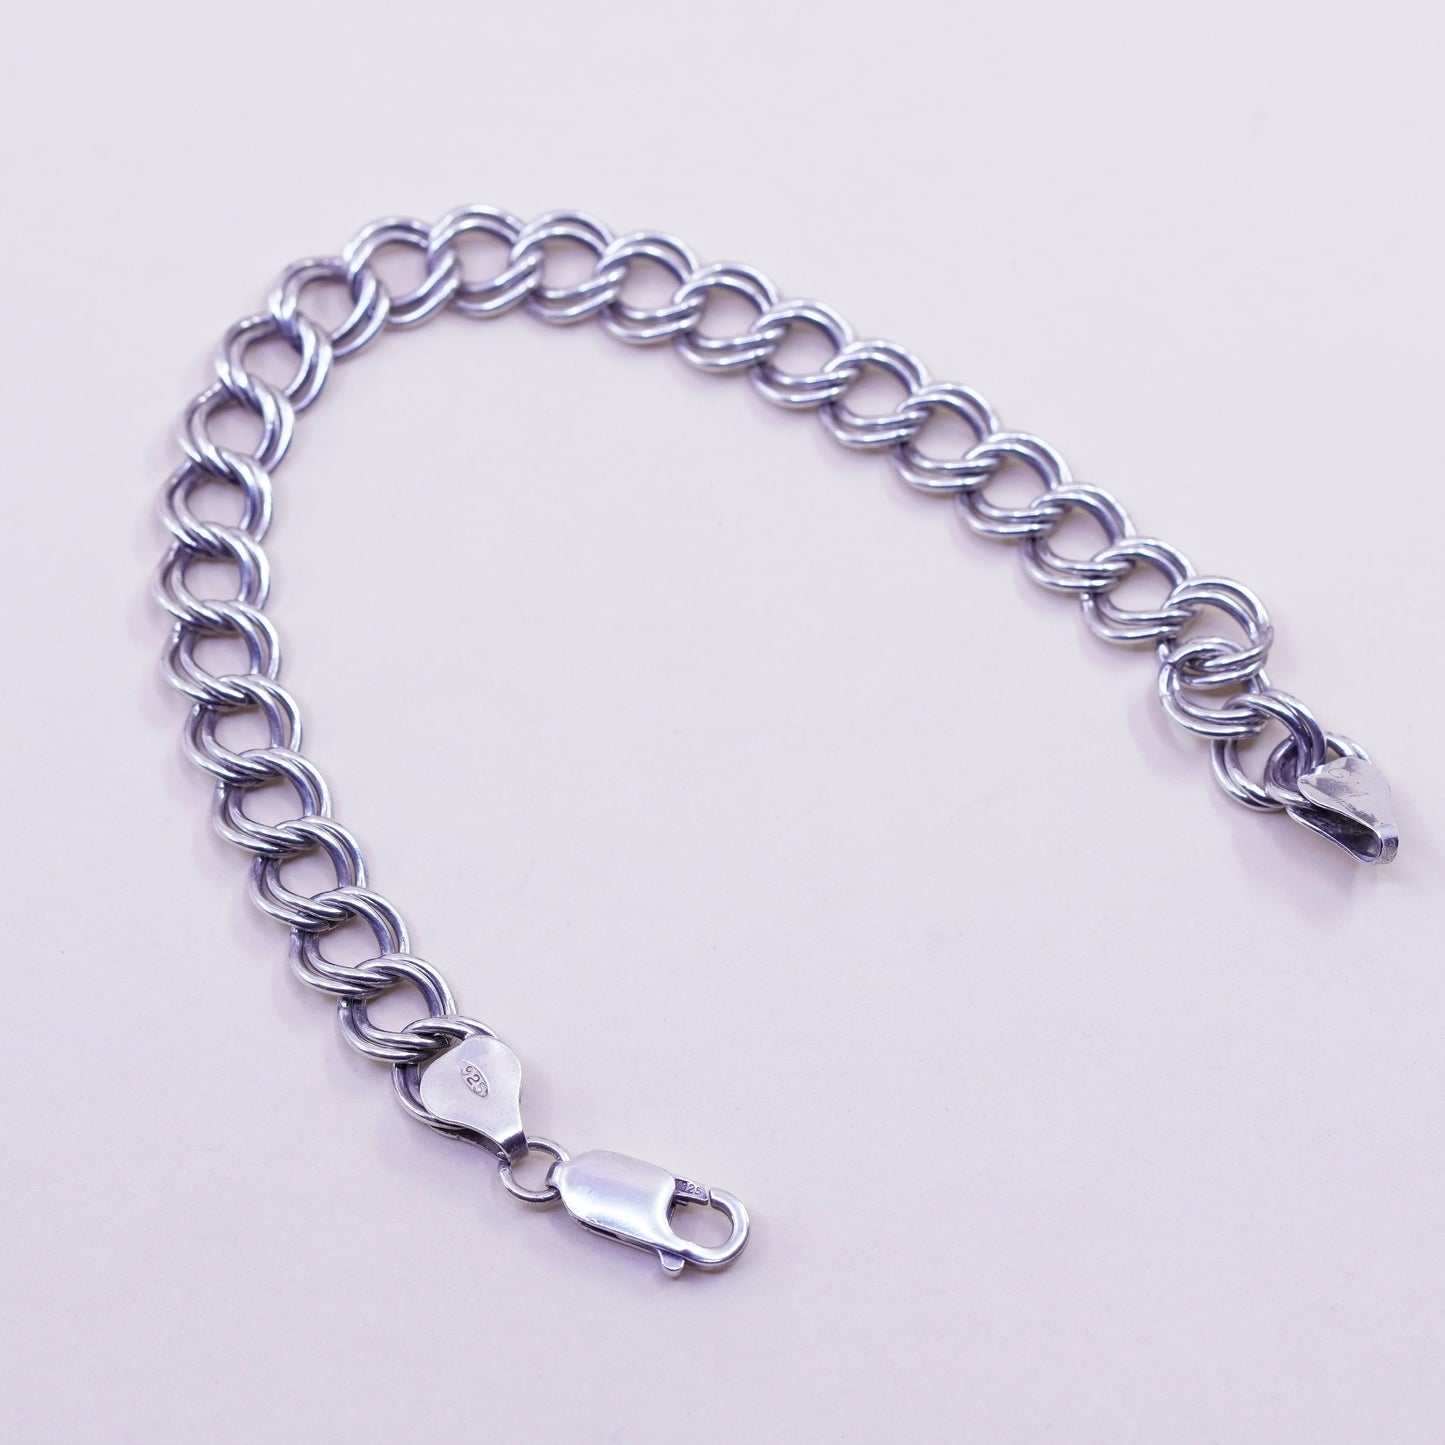 6”, 8mm, Vintage sterling silver double curb bracelet, 925 chain